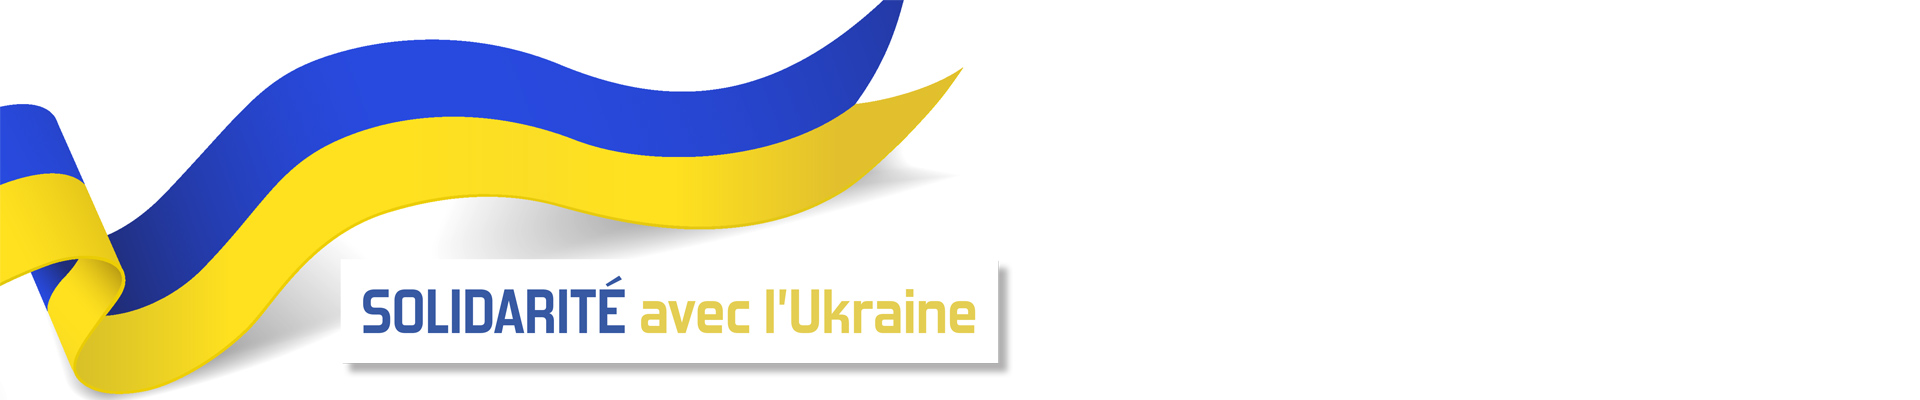 220302 solidarite ukraine banniere